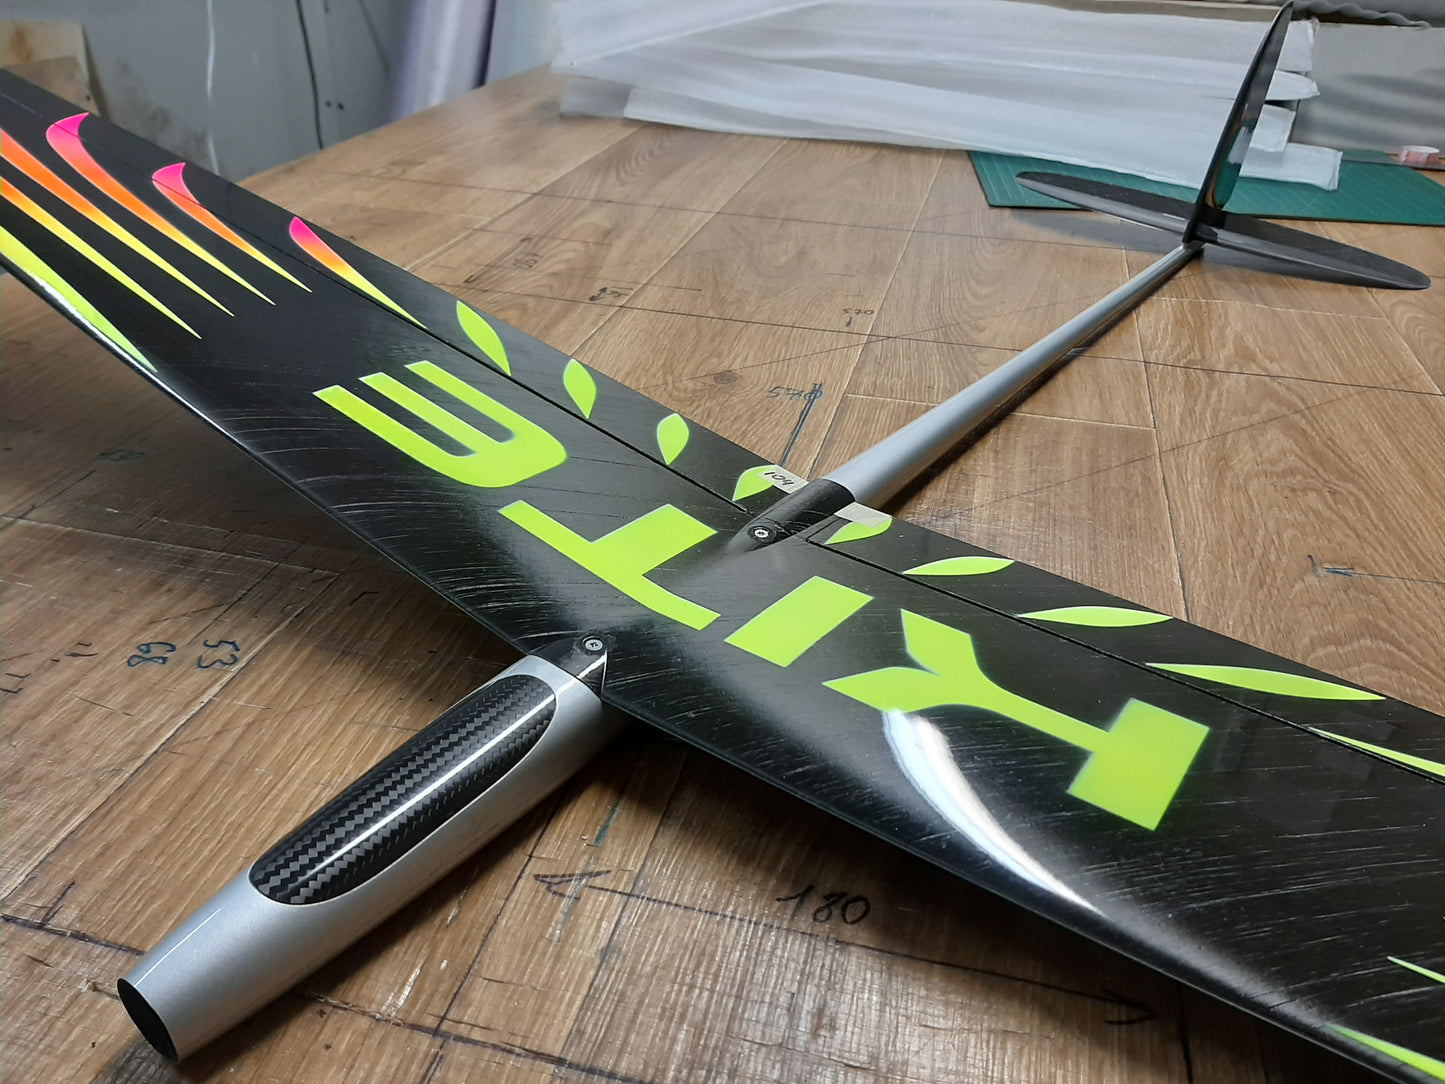 E-Kite 1part wing